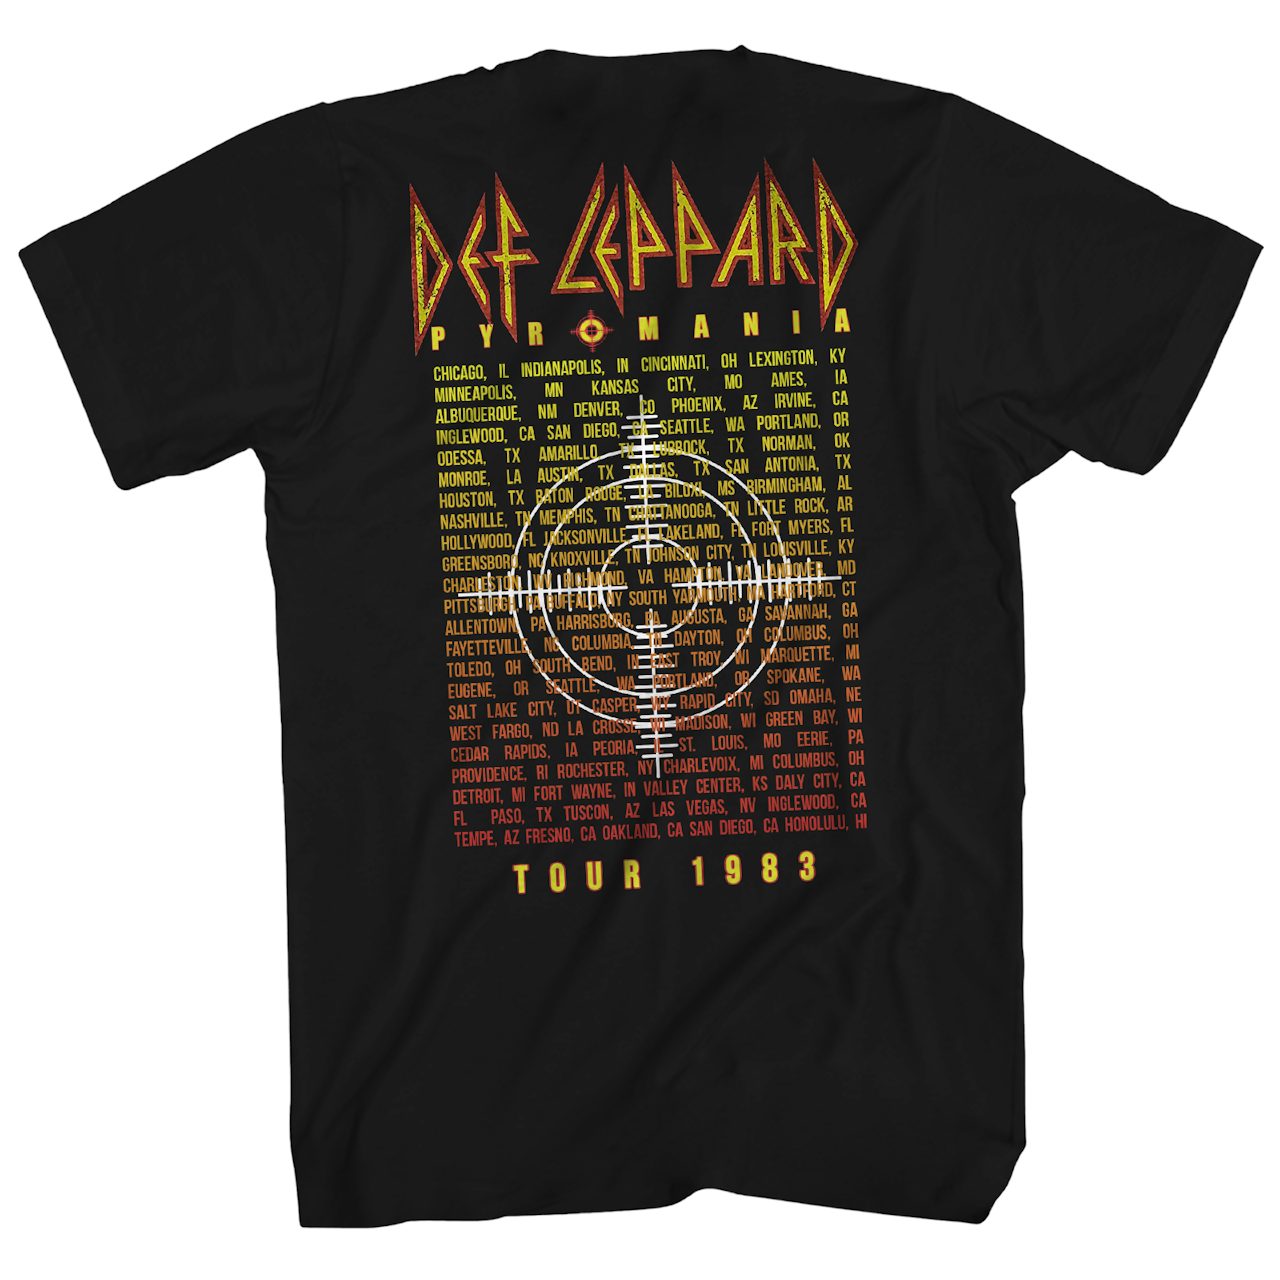 Def Leppard TShirt Blazing Thru America Tour Def Leppard Shirt (Reissue)